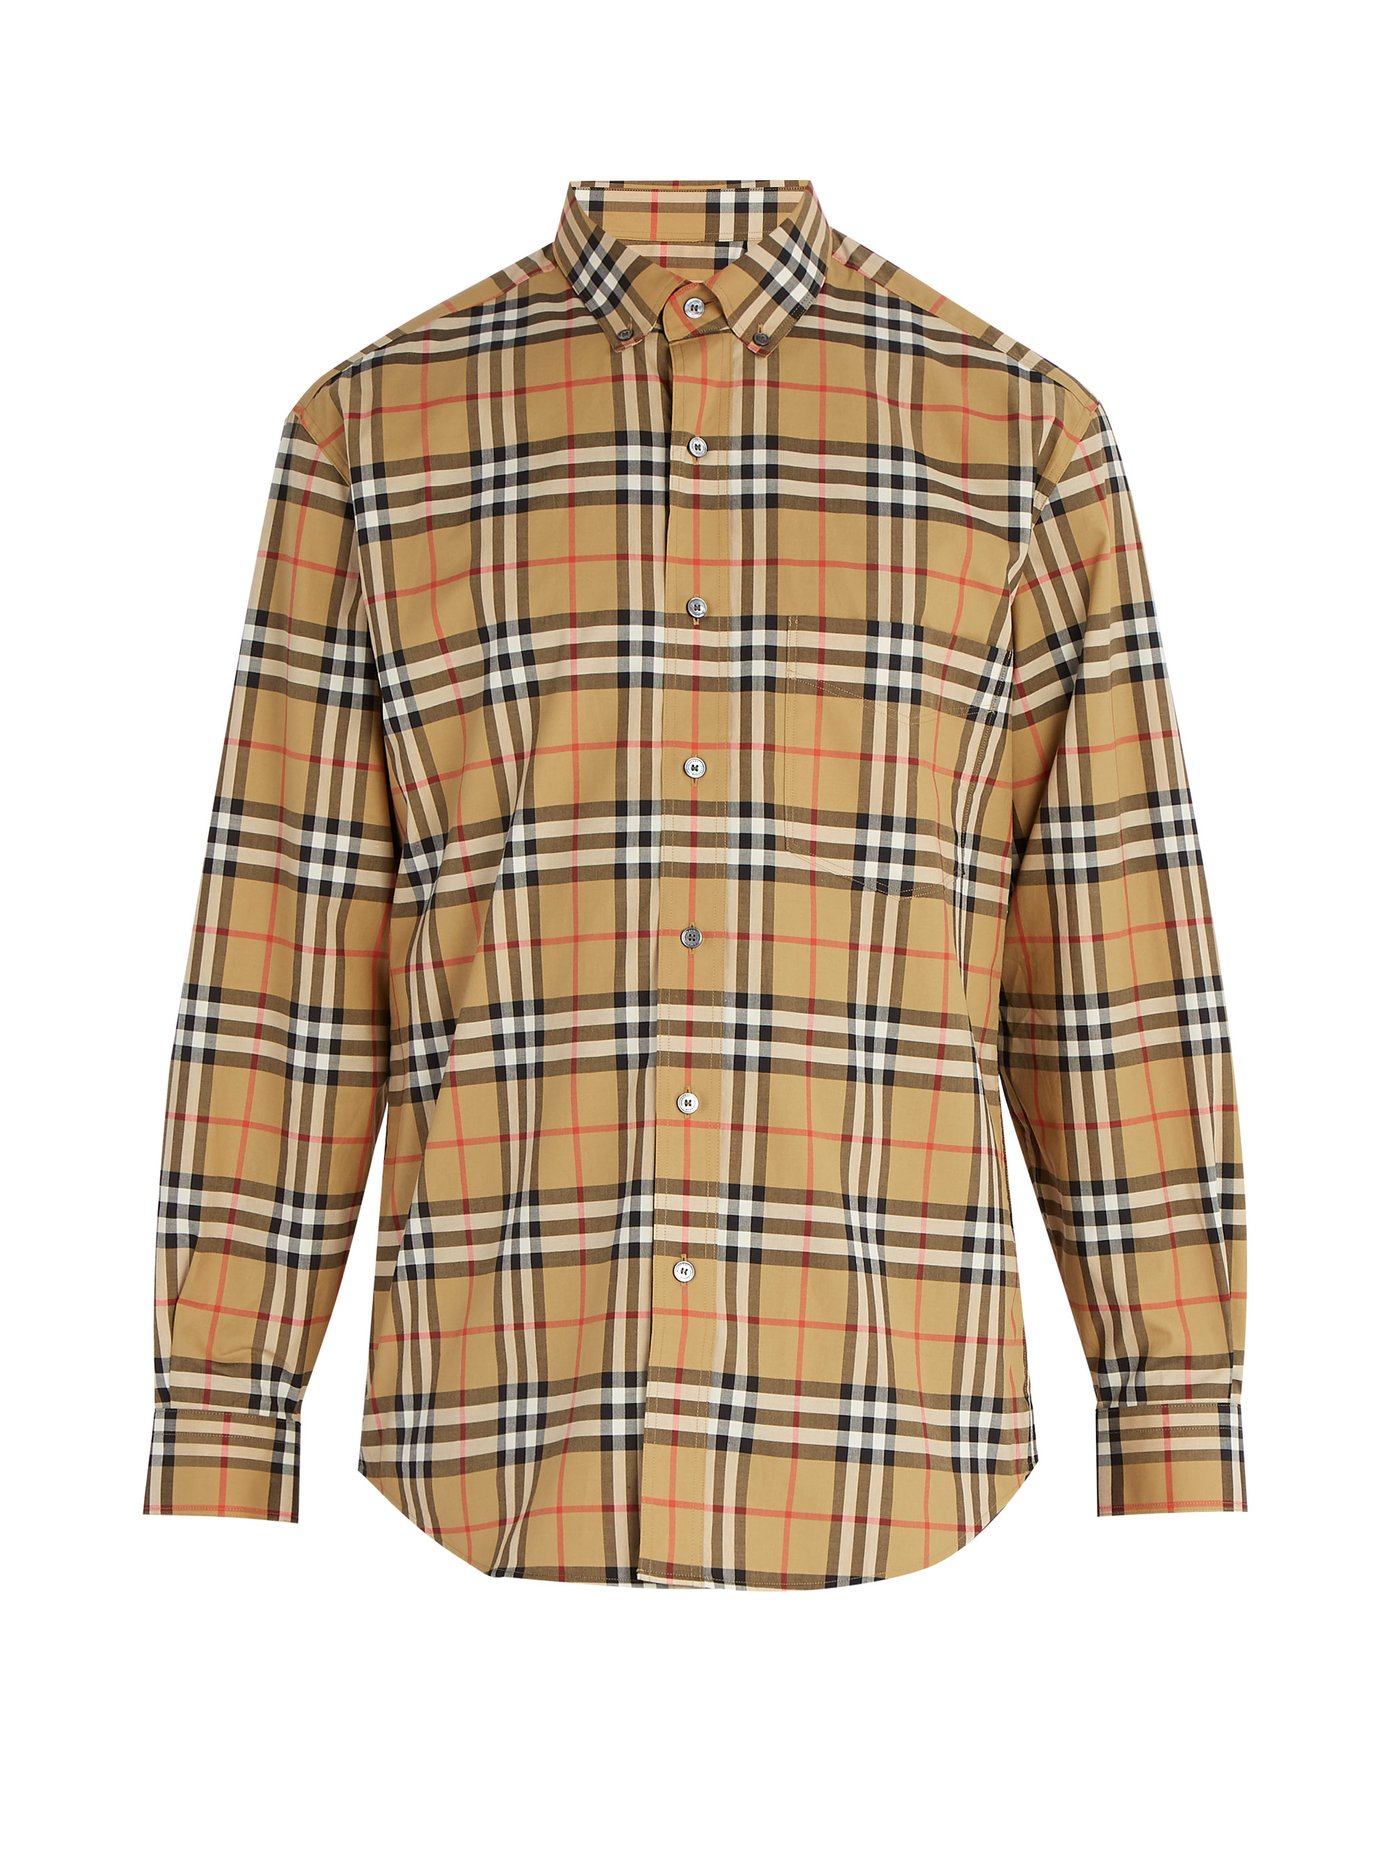 House Check cotton shirt | Burberry 